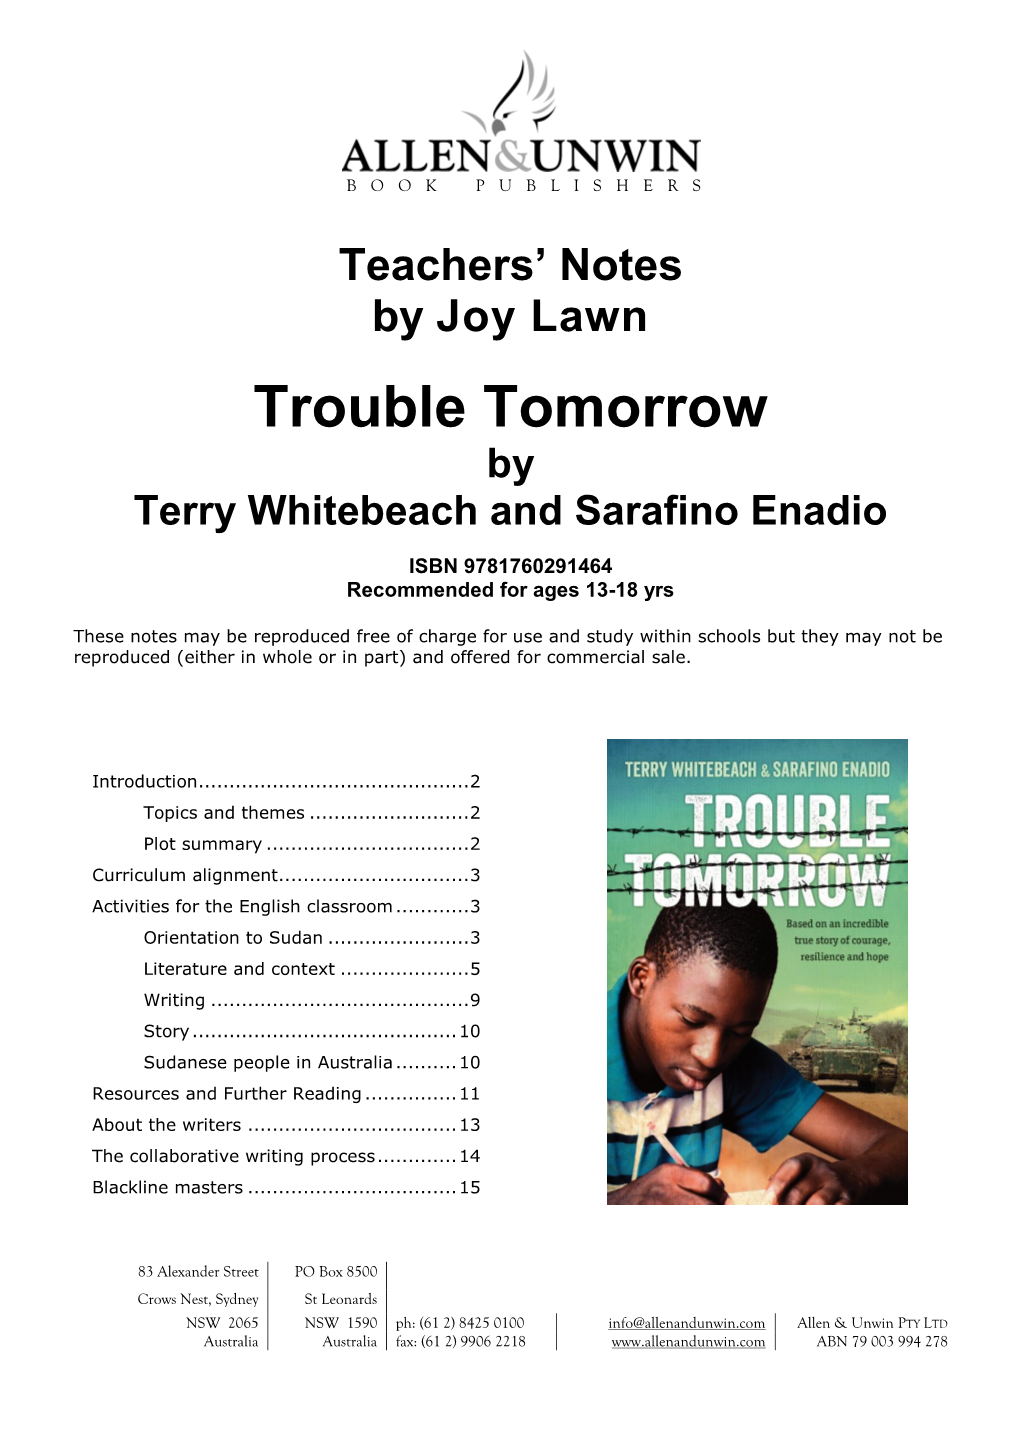 Trouble Tomorrow by Terry Whitebeach and Sarafino Enadio